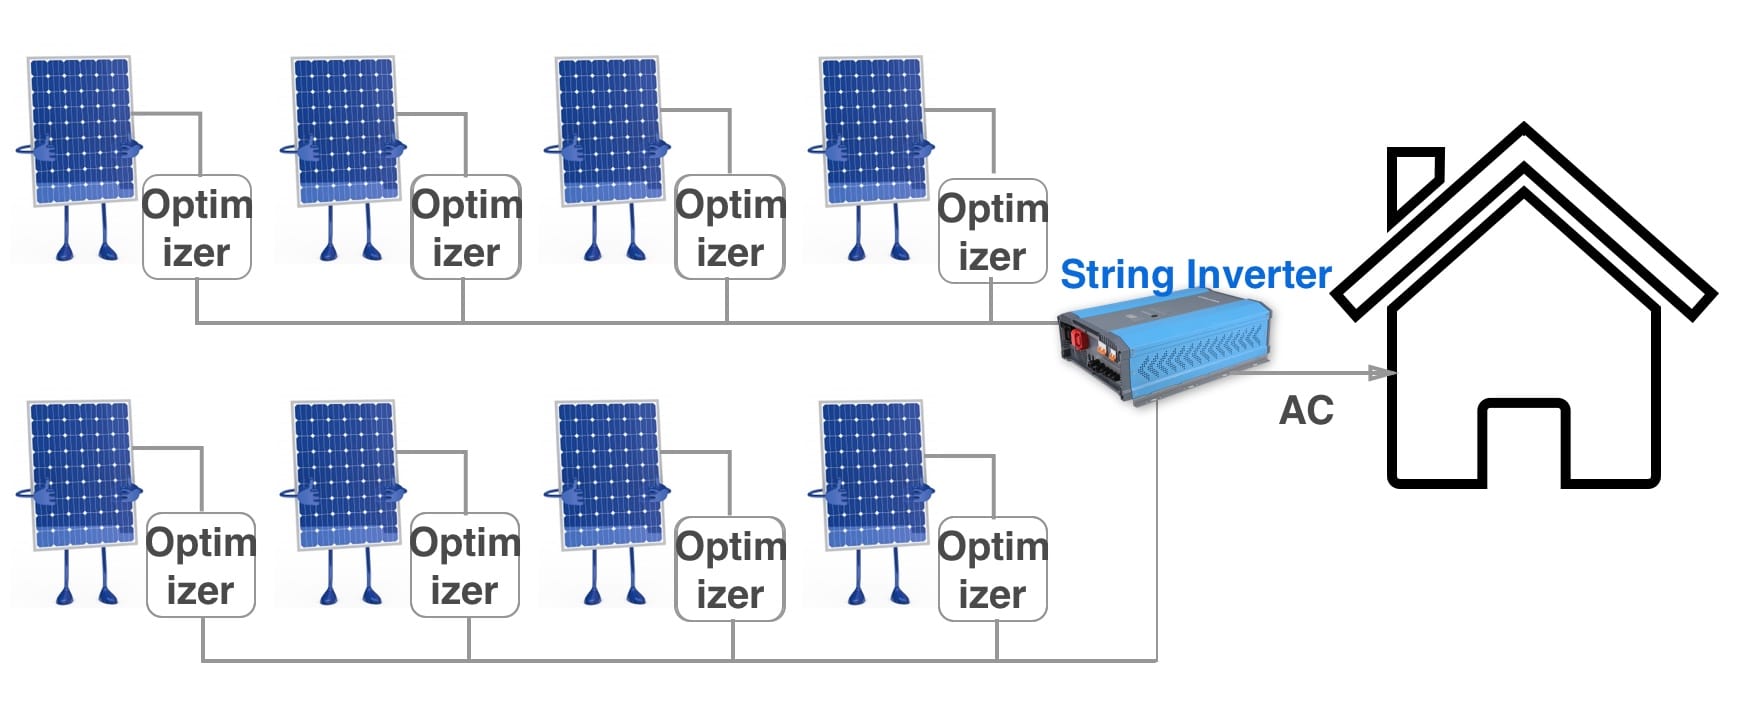 Solar Power Optimizers